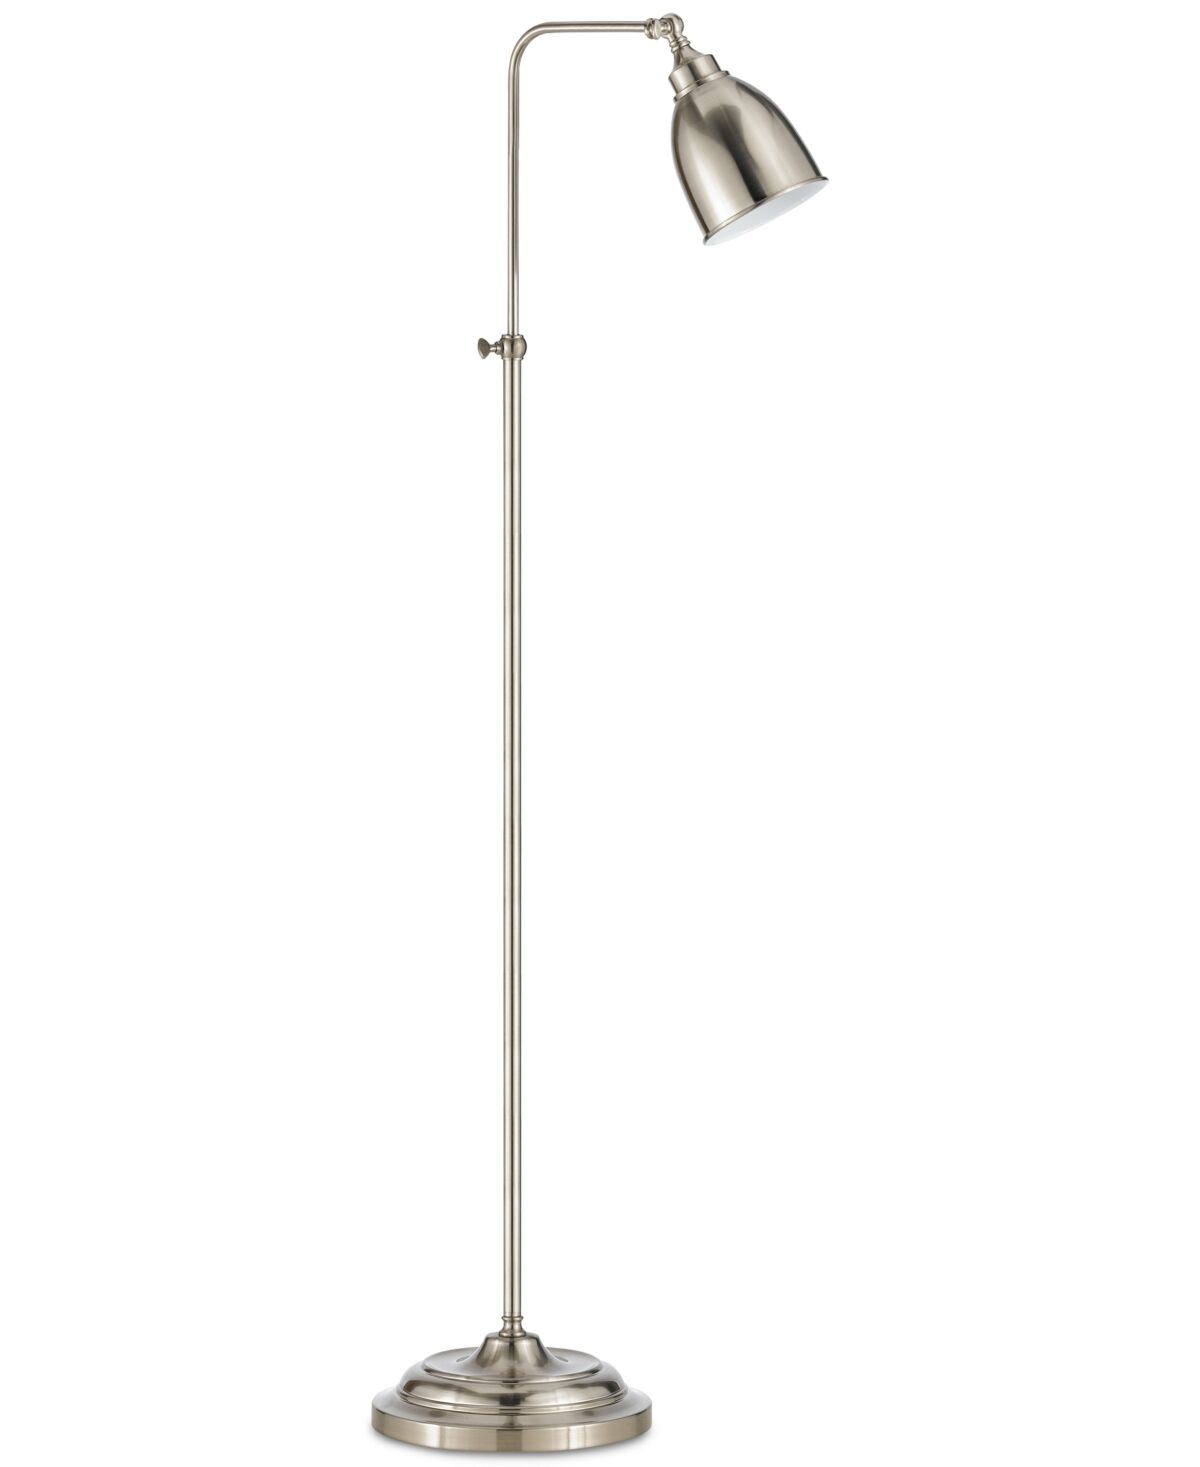 Cal Lighting Pharmacy Floor Lamp with Adjustable Pole - Brushed Steel